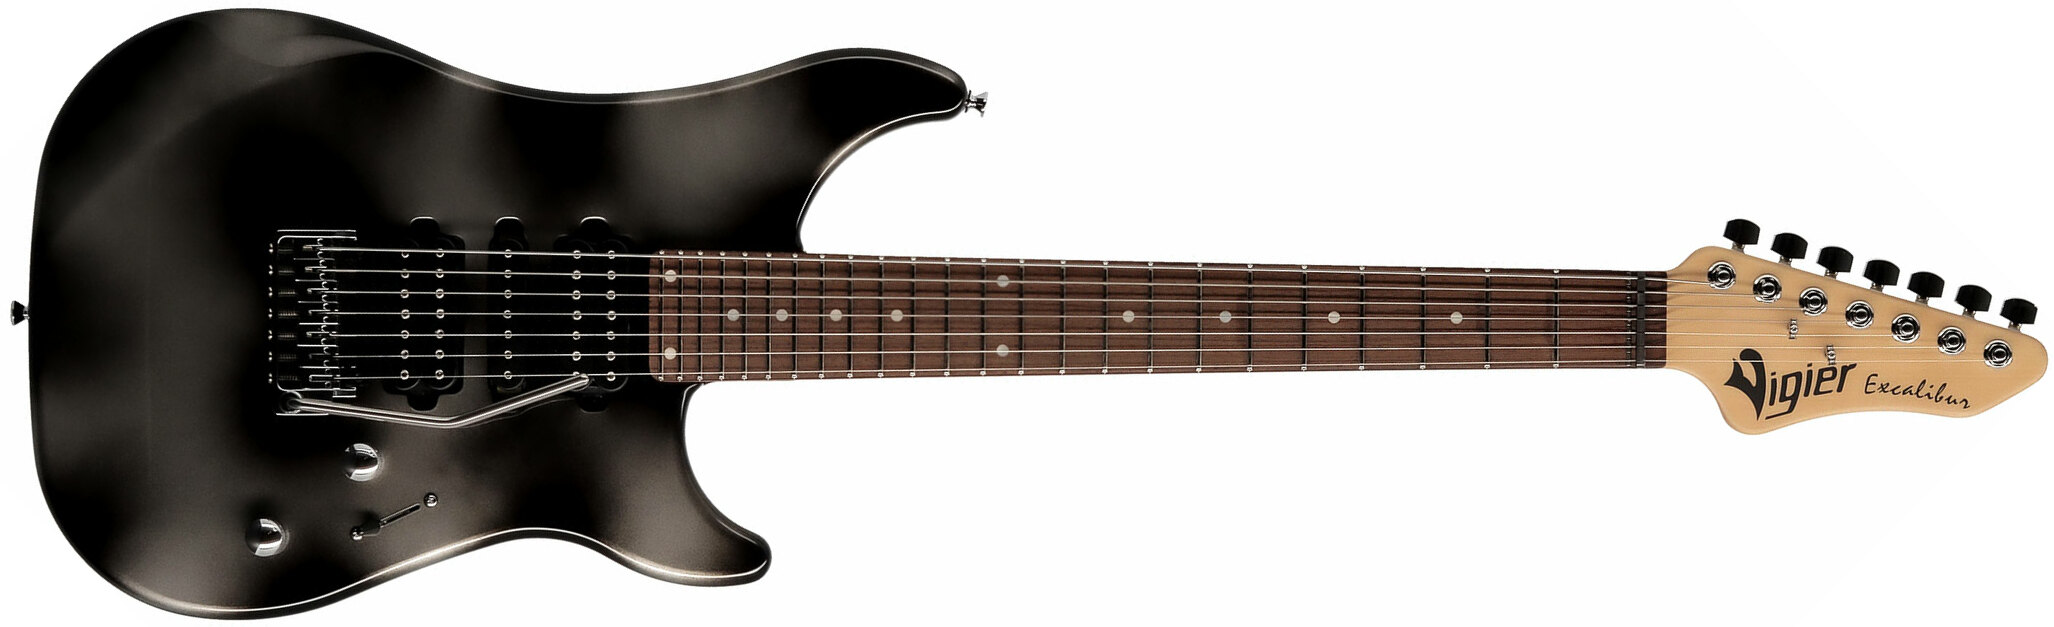 Vigier Excalibur Supra 7c Hsh Trem Rw - Urban Metal - 7-snarige elektrische gitaar - Main picture